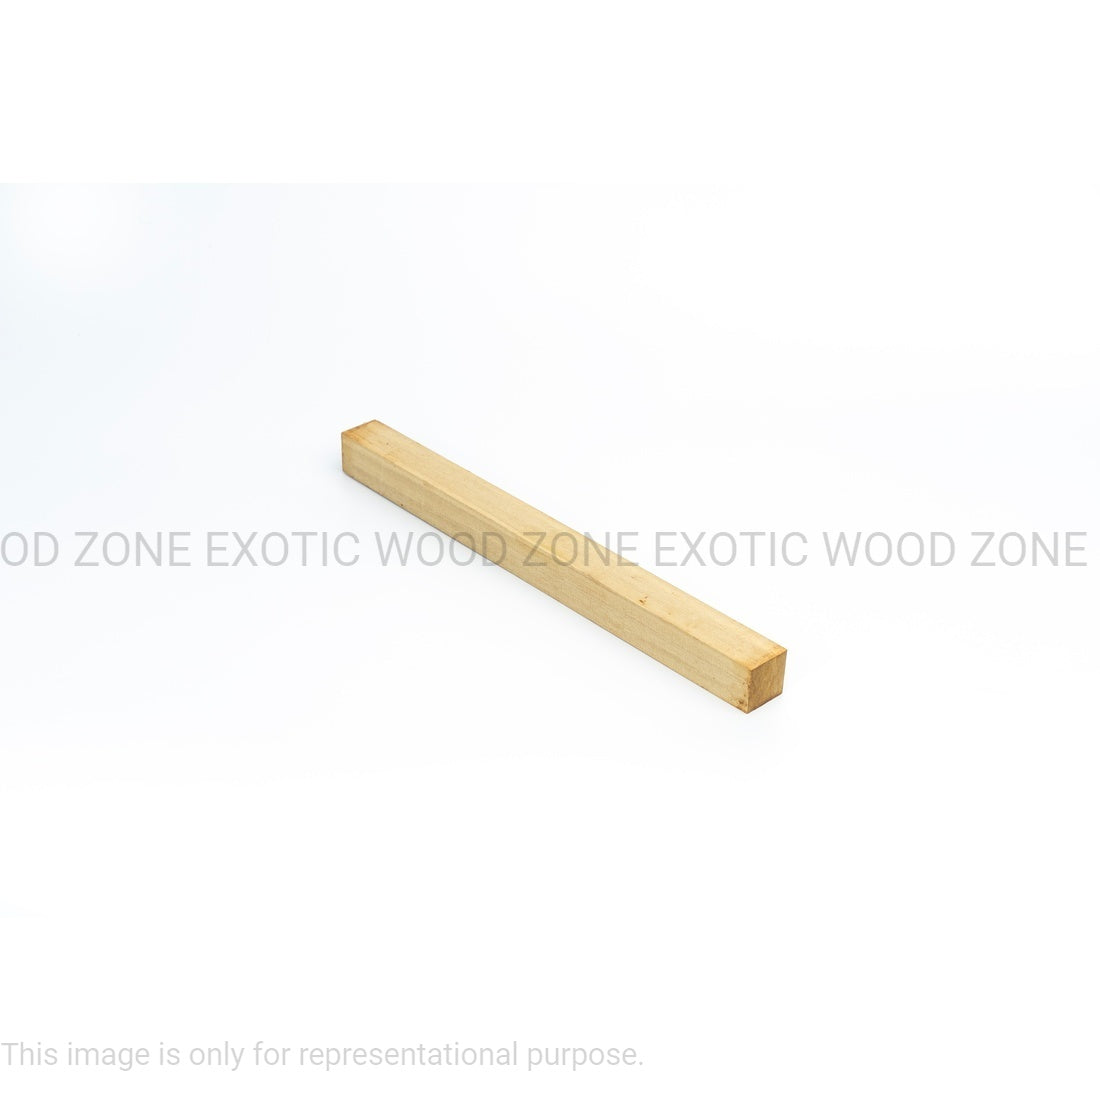 Poplar Hobbywood Blank 1&quot; x 1 &quot; x 12&quot; inches Exotic Wood Zone